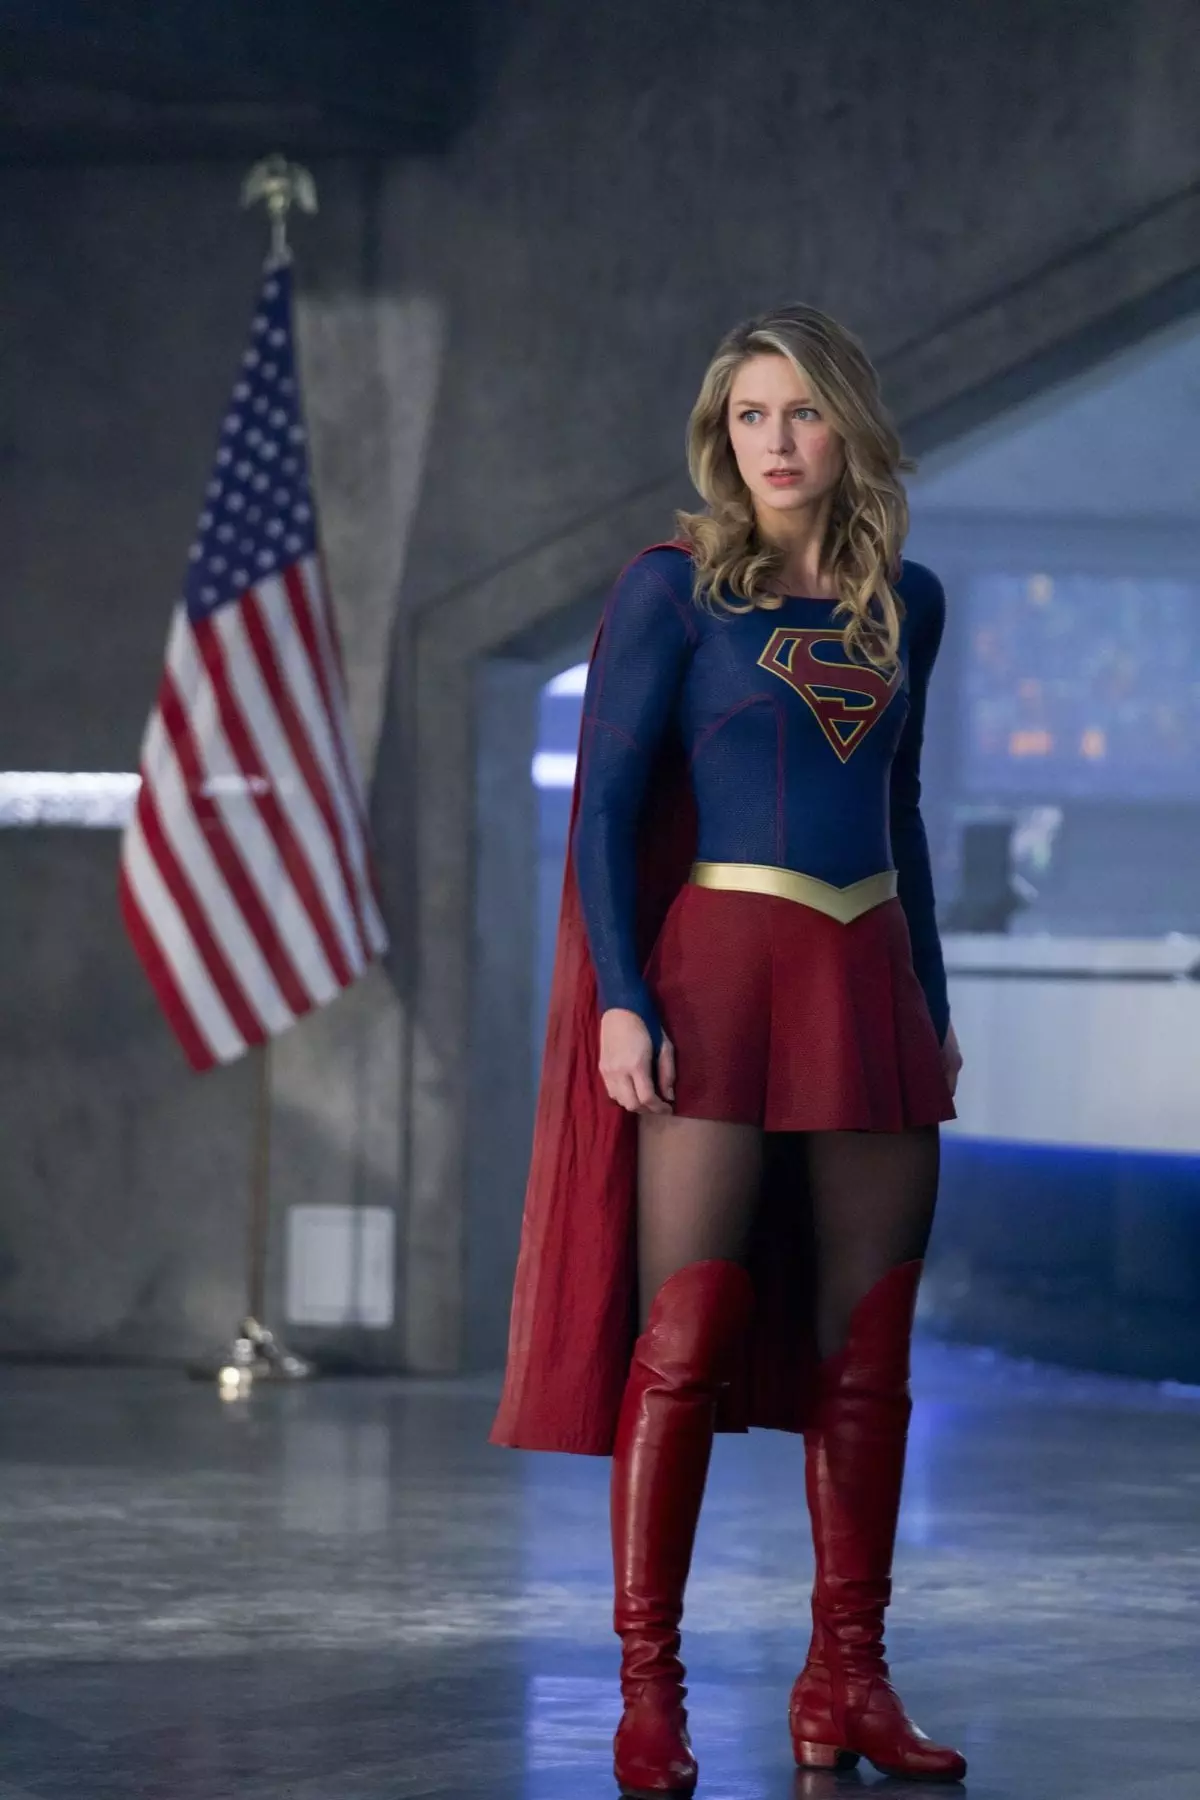 supergirl season 3 complete download kickass